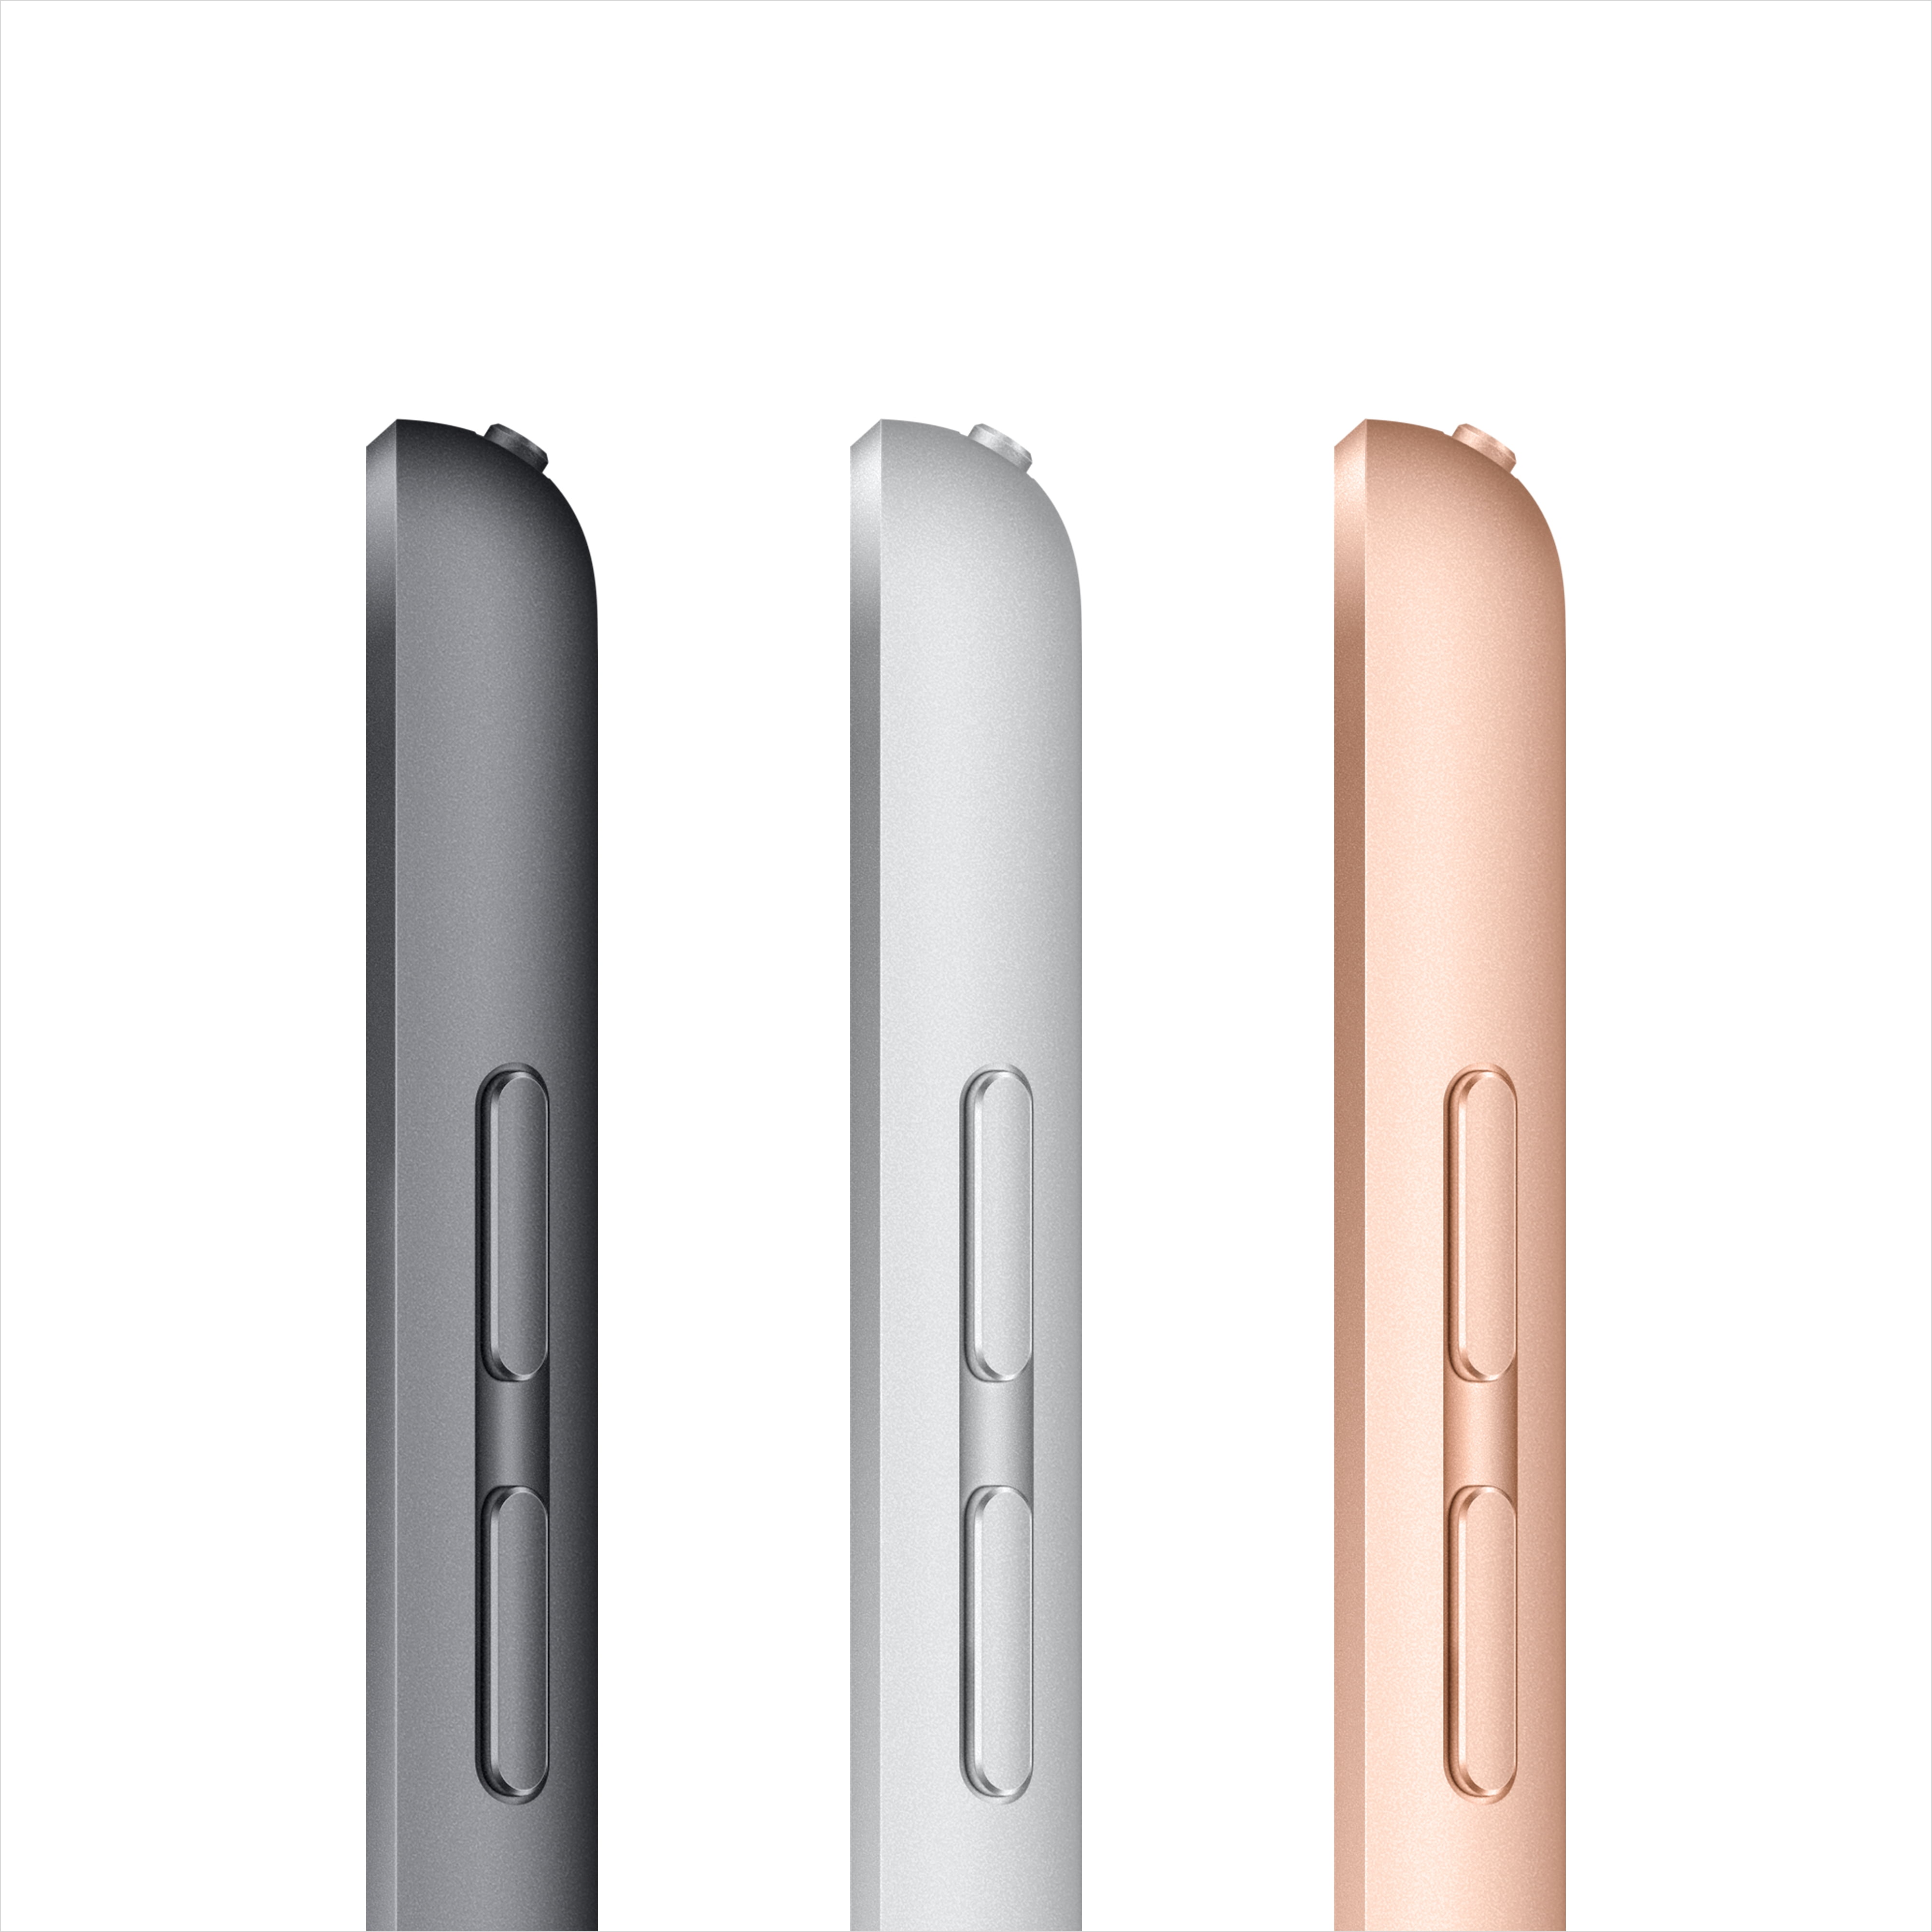 Apple 10.2-inch iPad (8th Gen) Wi-Fi 128GB - Silver - Walmart.com